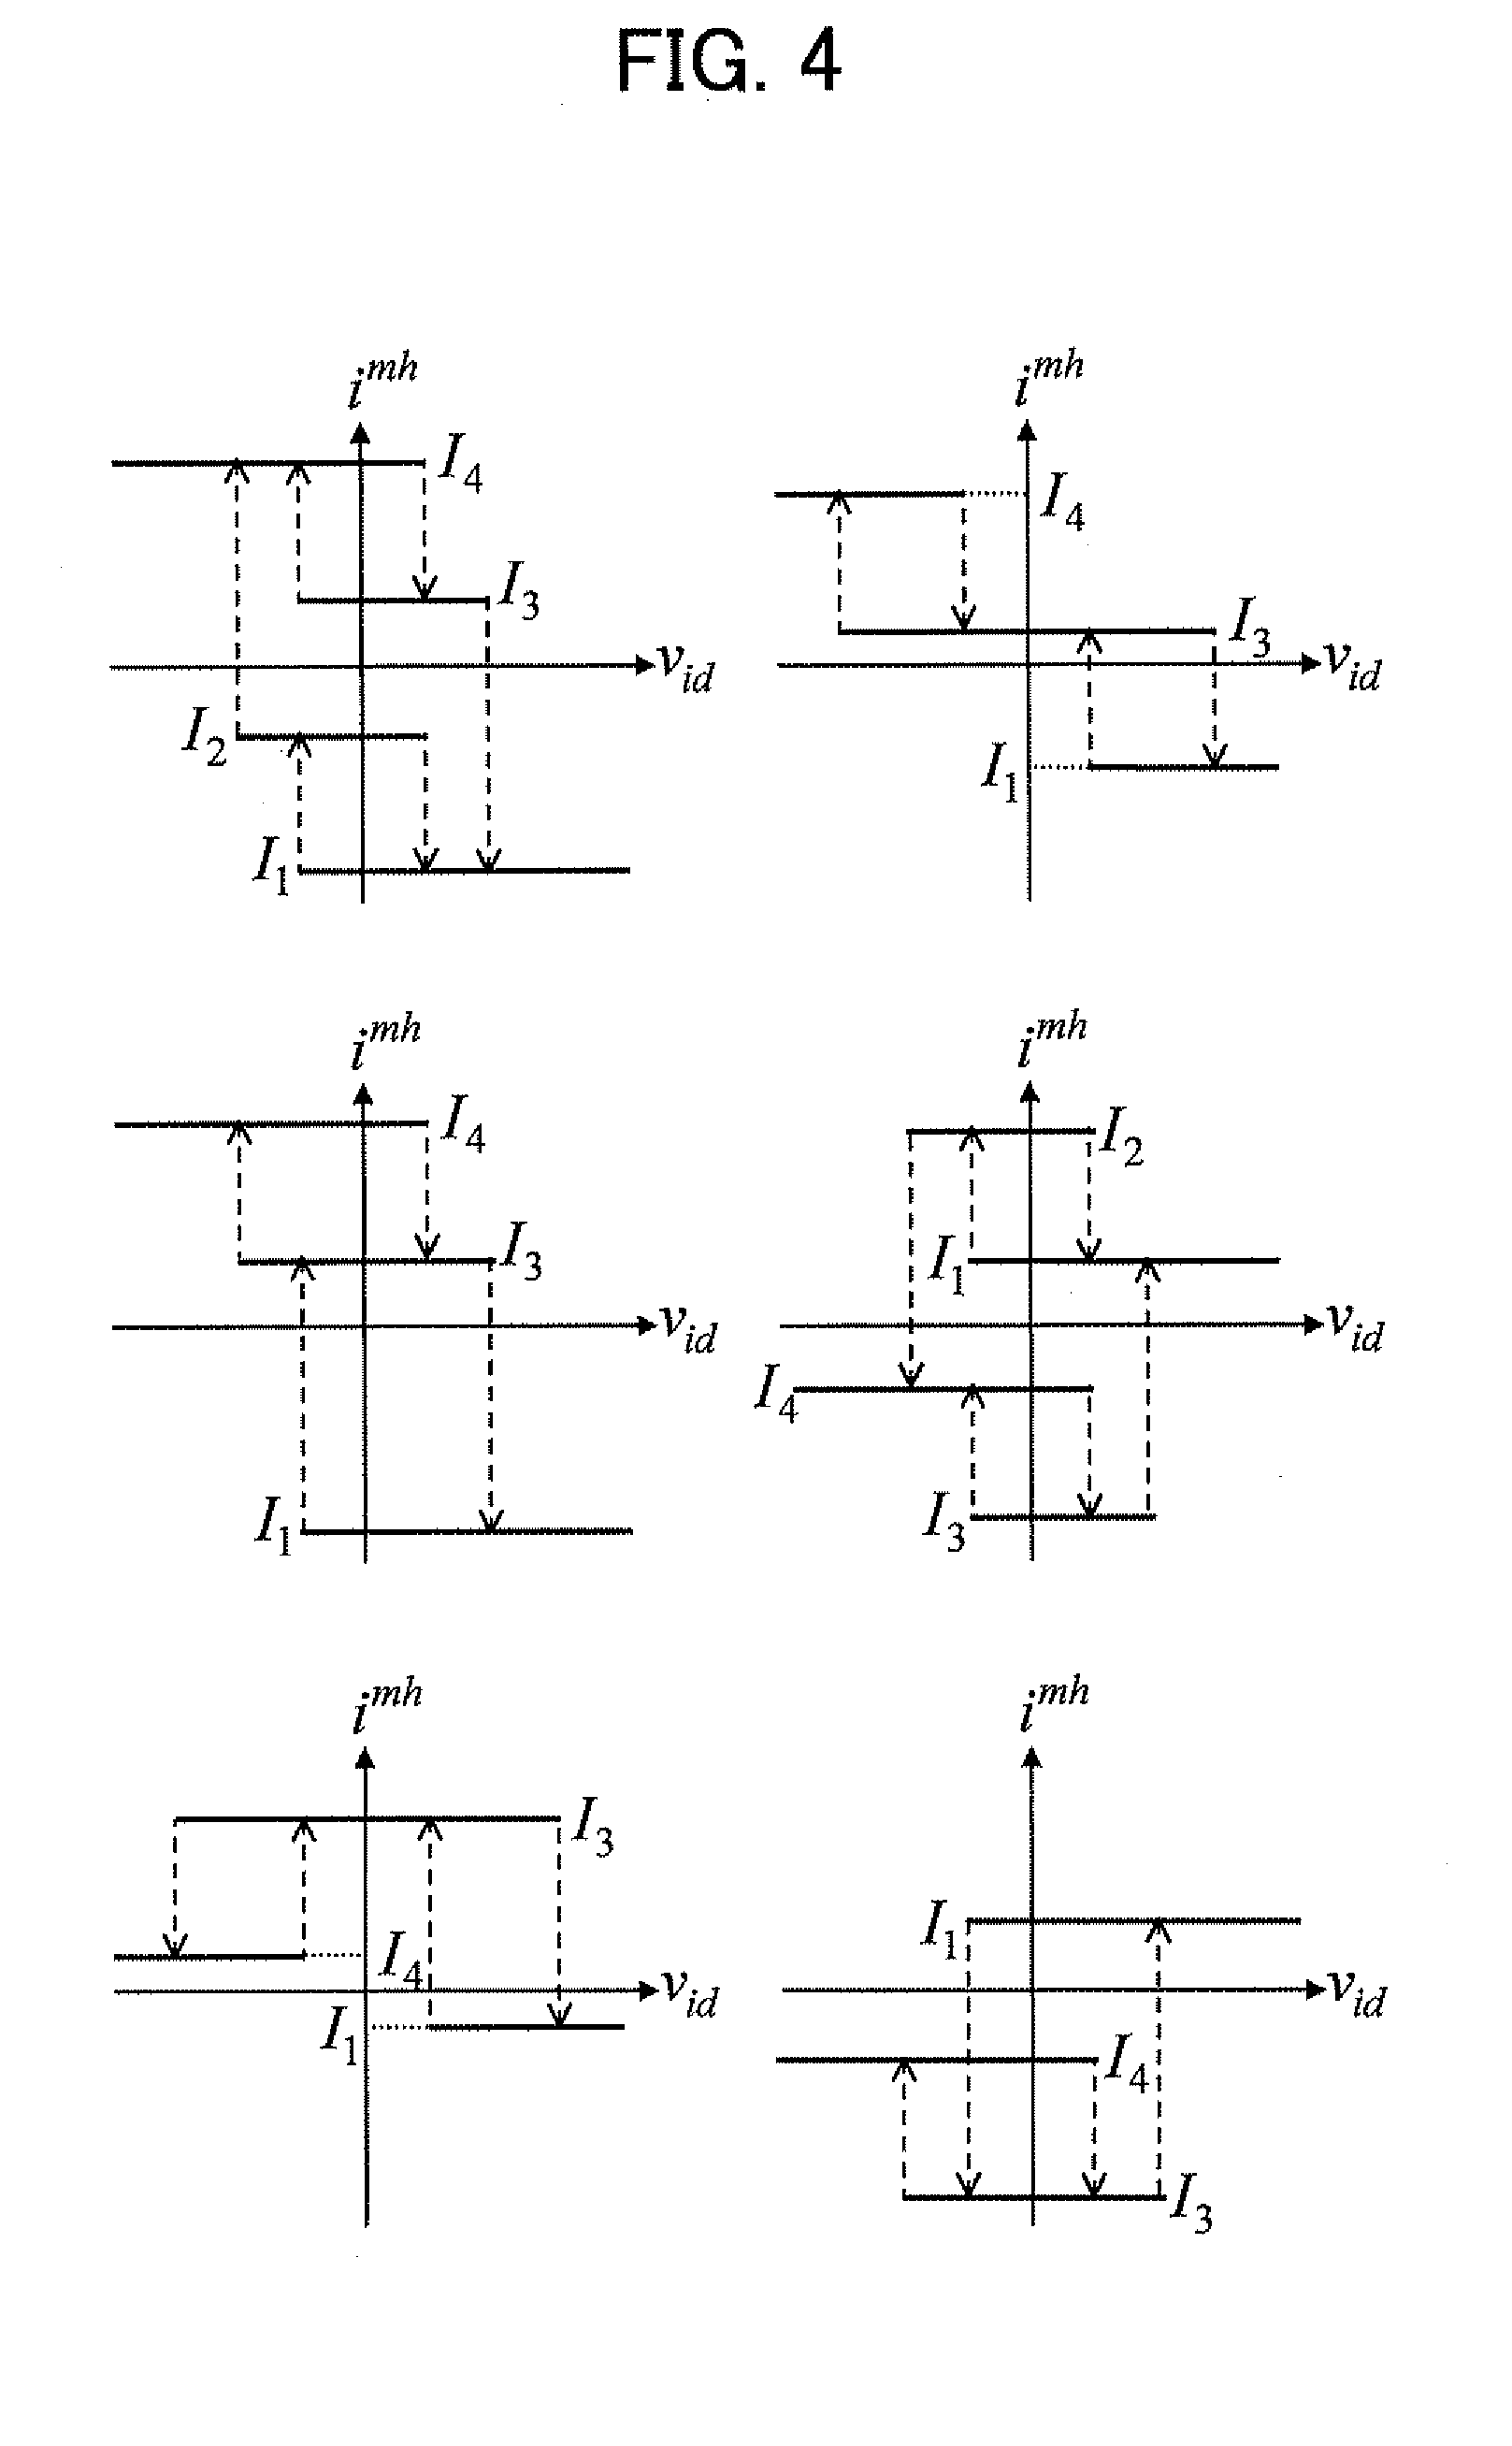 Multi-screw chaotic oscillator circuit